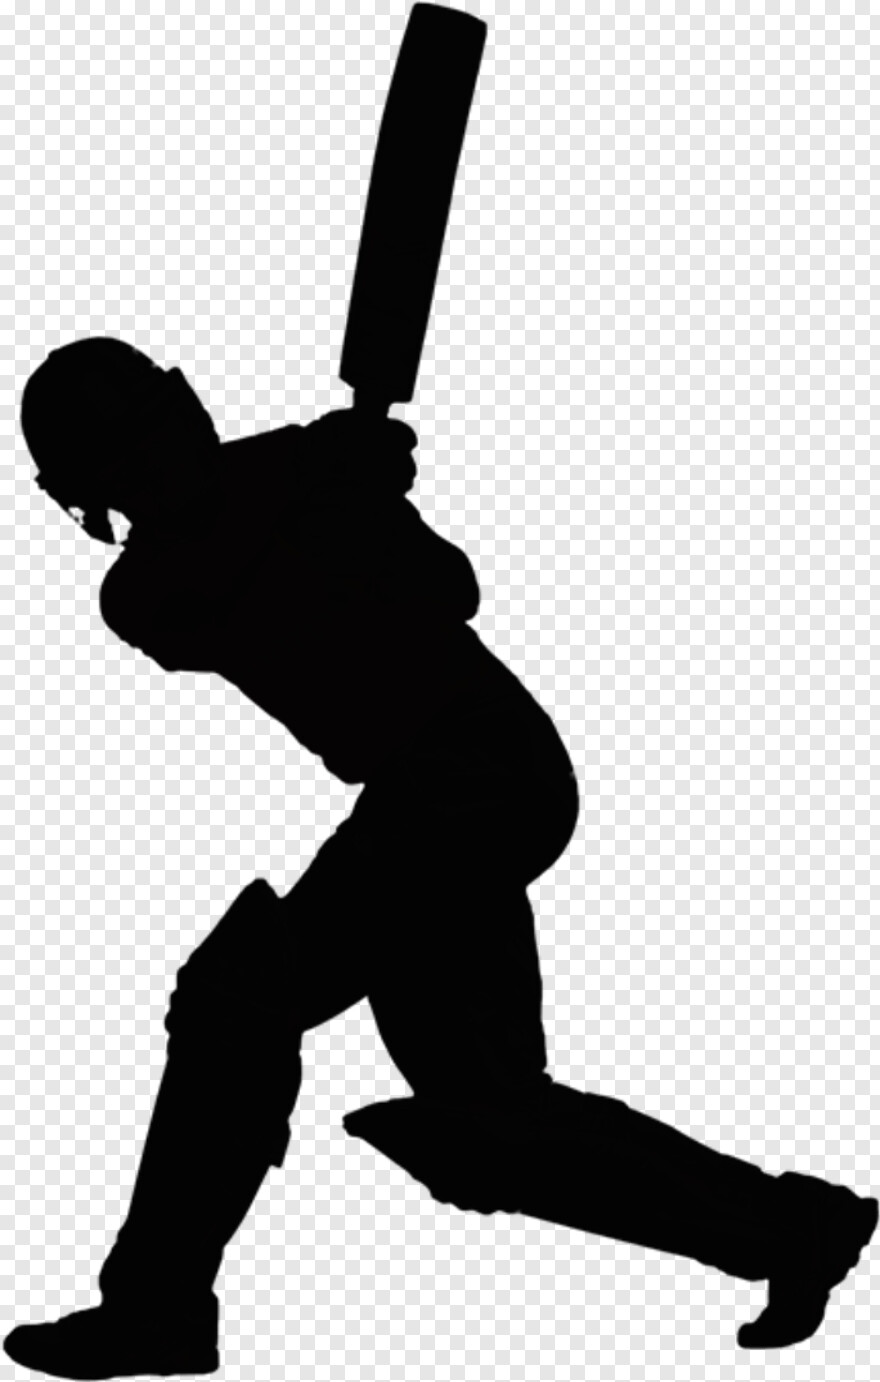  Cricket Vector, Cricket Images, Cricket Kit, Cricket Cup, Cricket Clipart, Cricket Bat And Ball